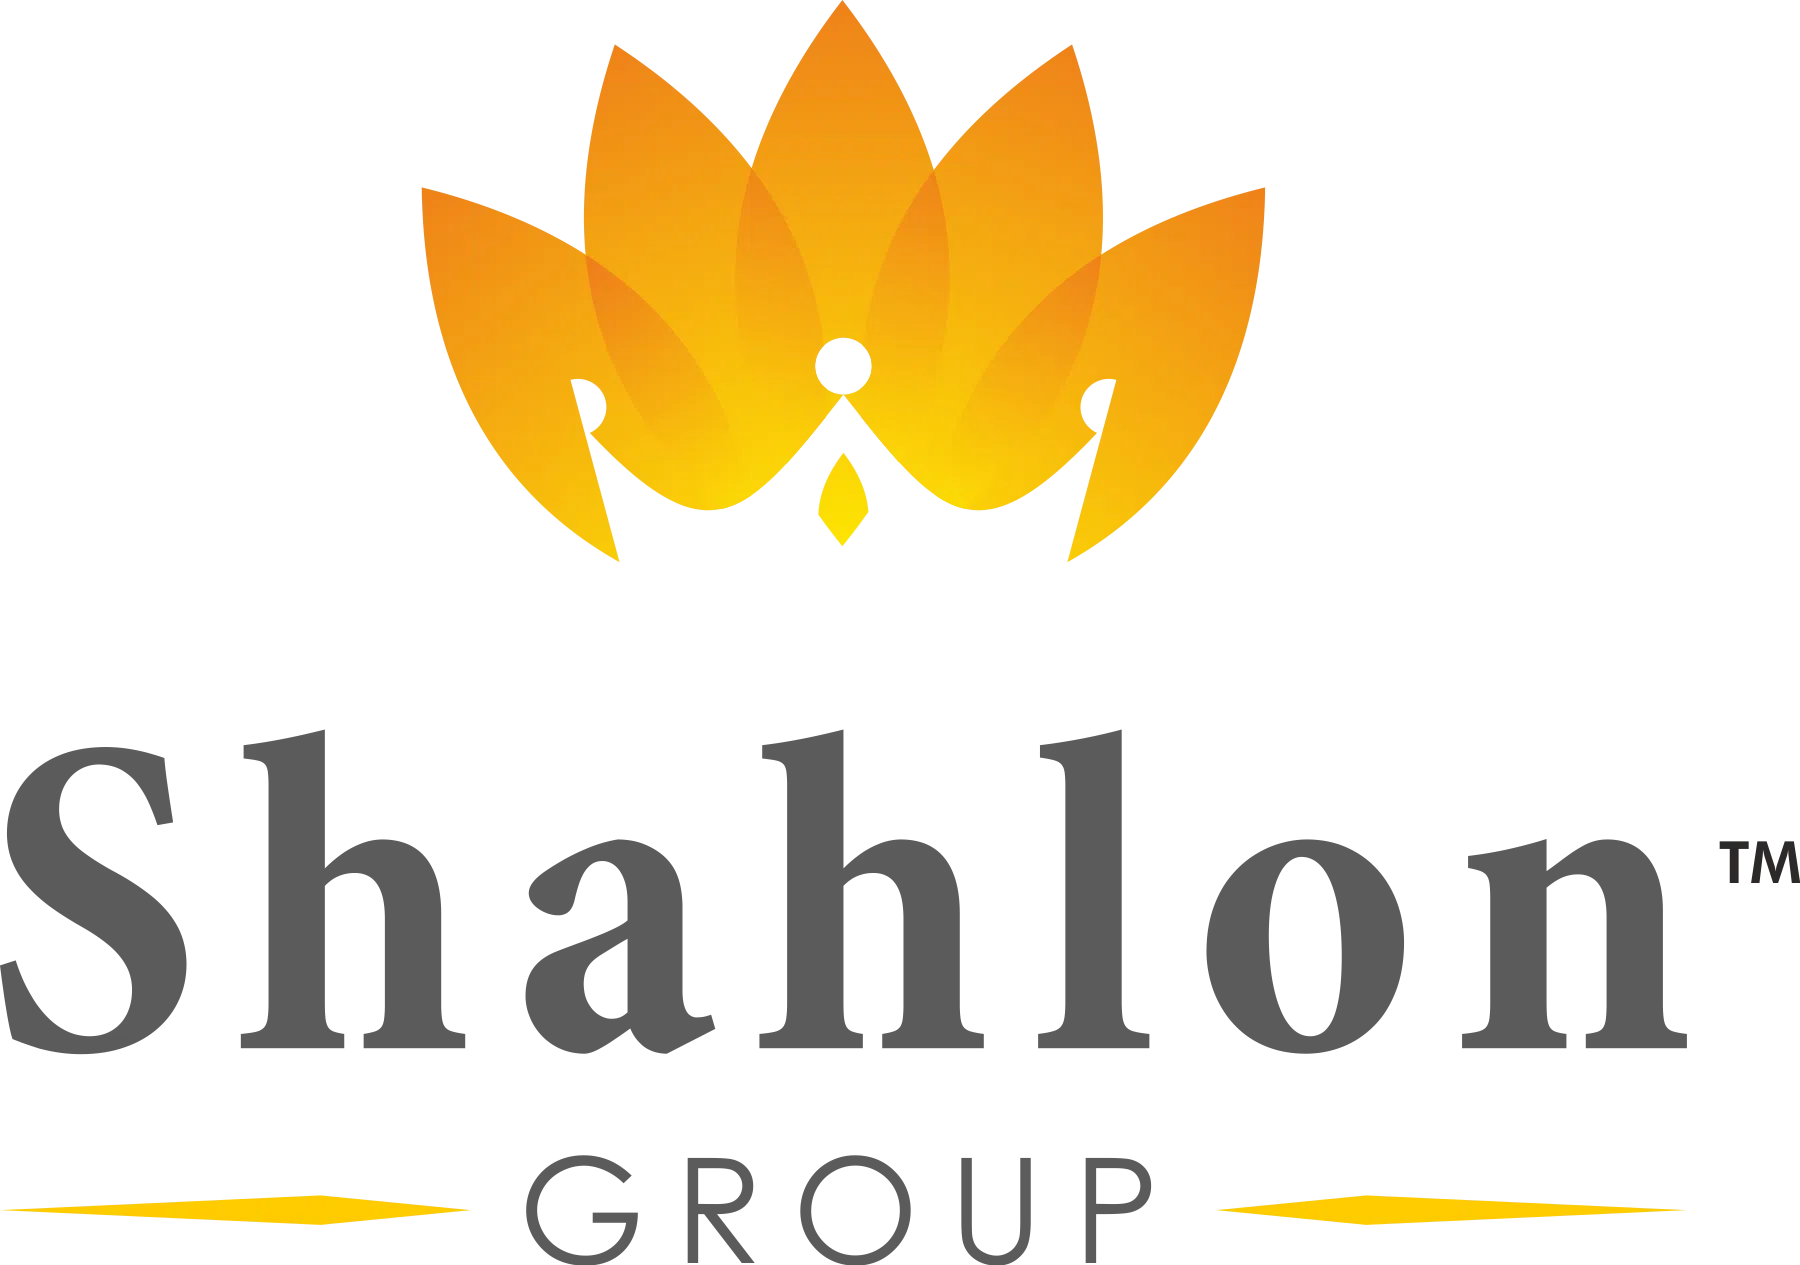 Shahlon Silk Industries Limited image